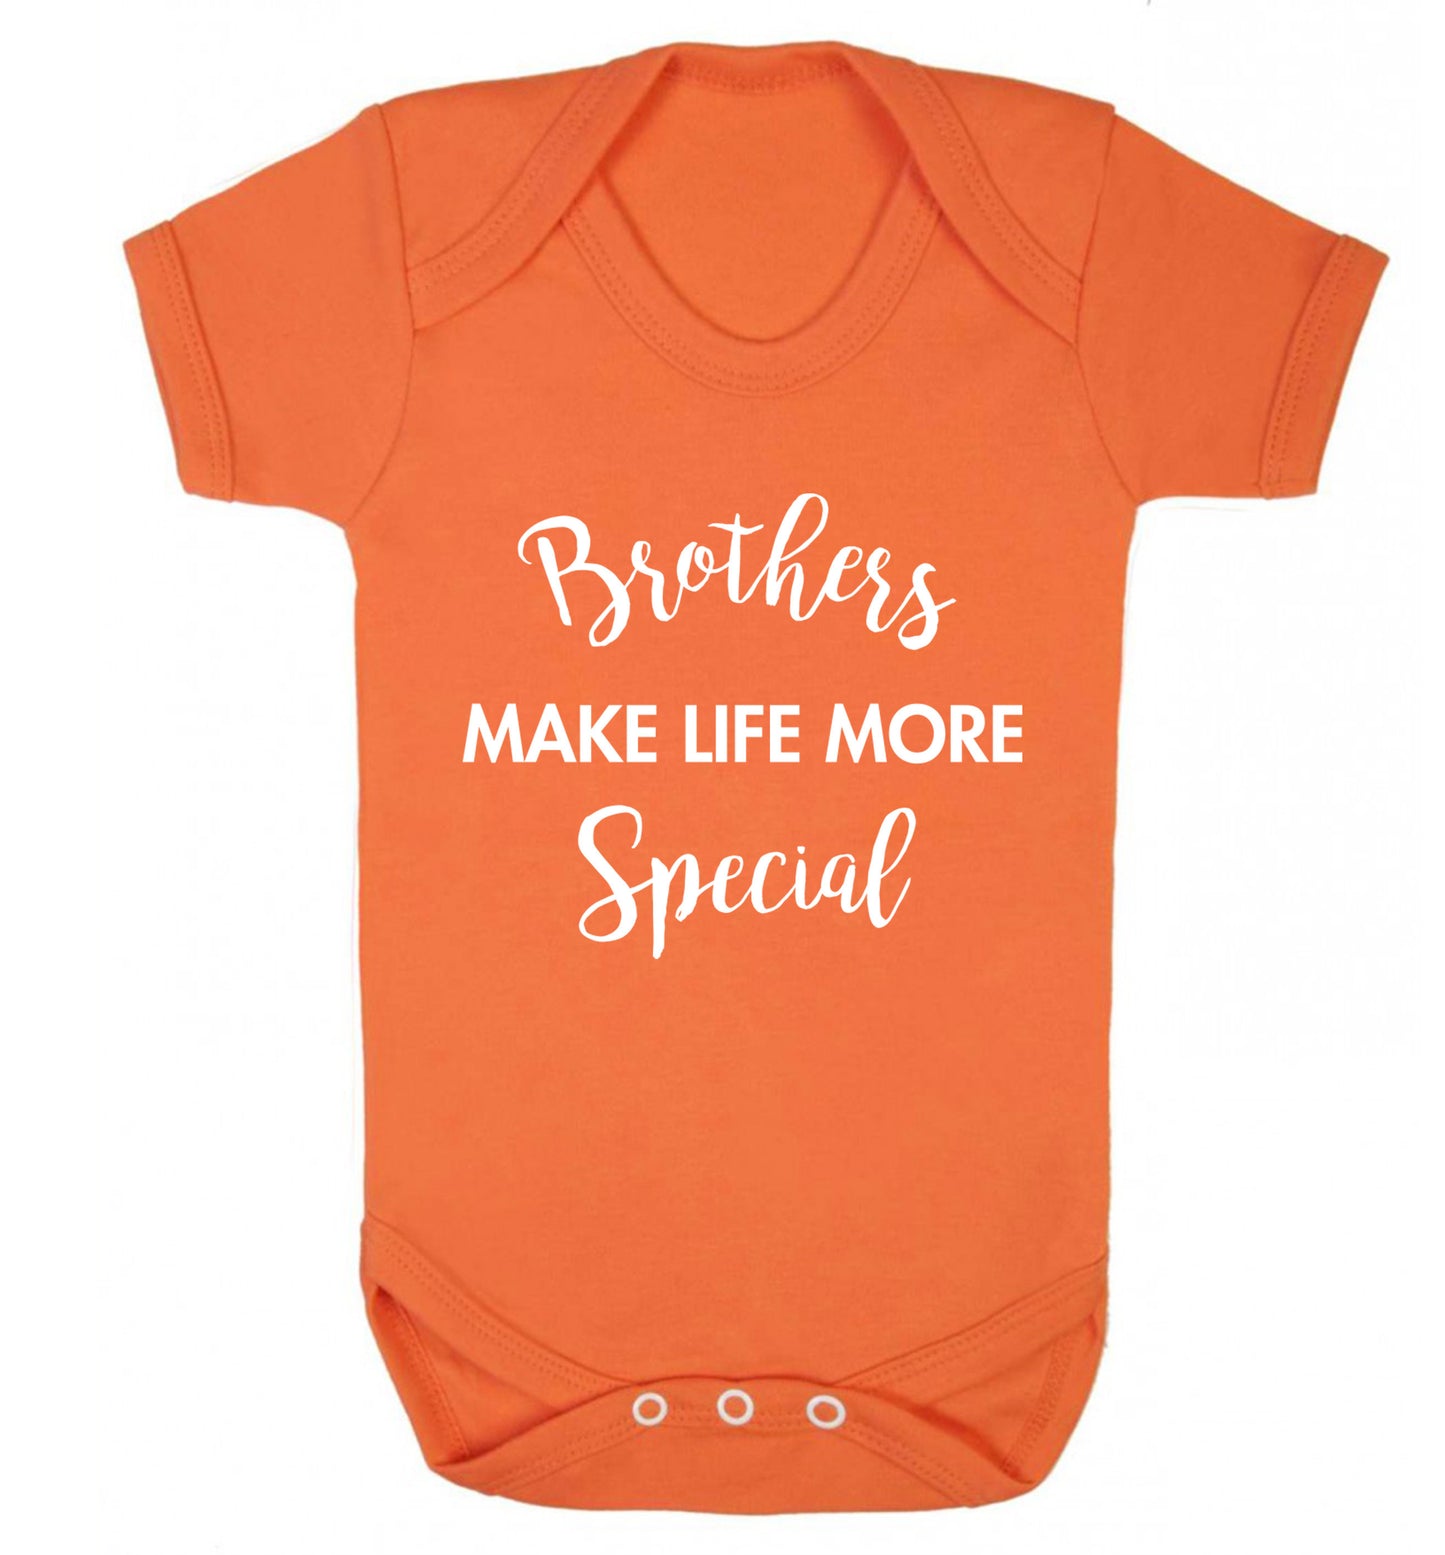 Brothers make life more special Baby Vest orange 18-24 months